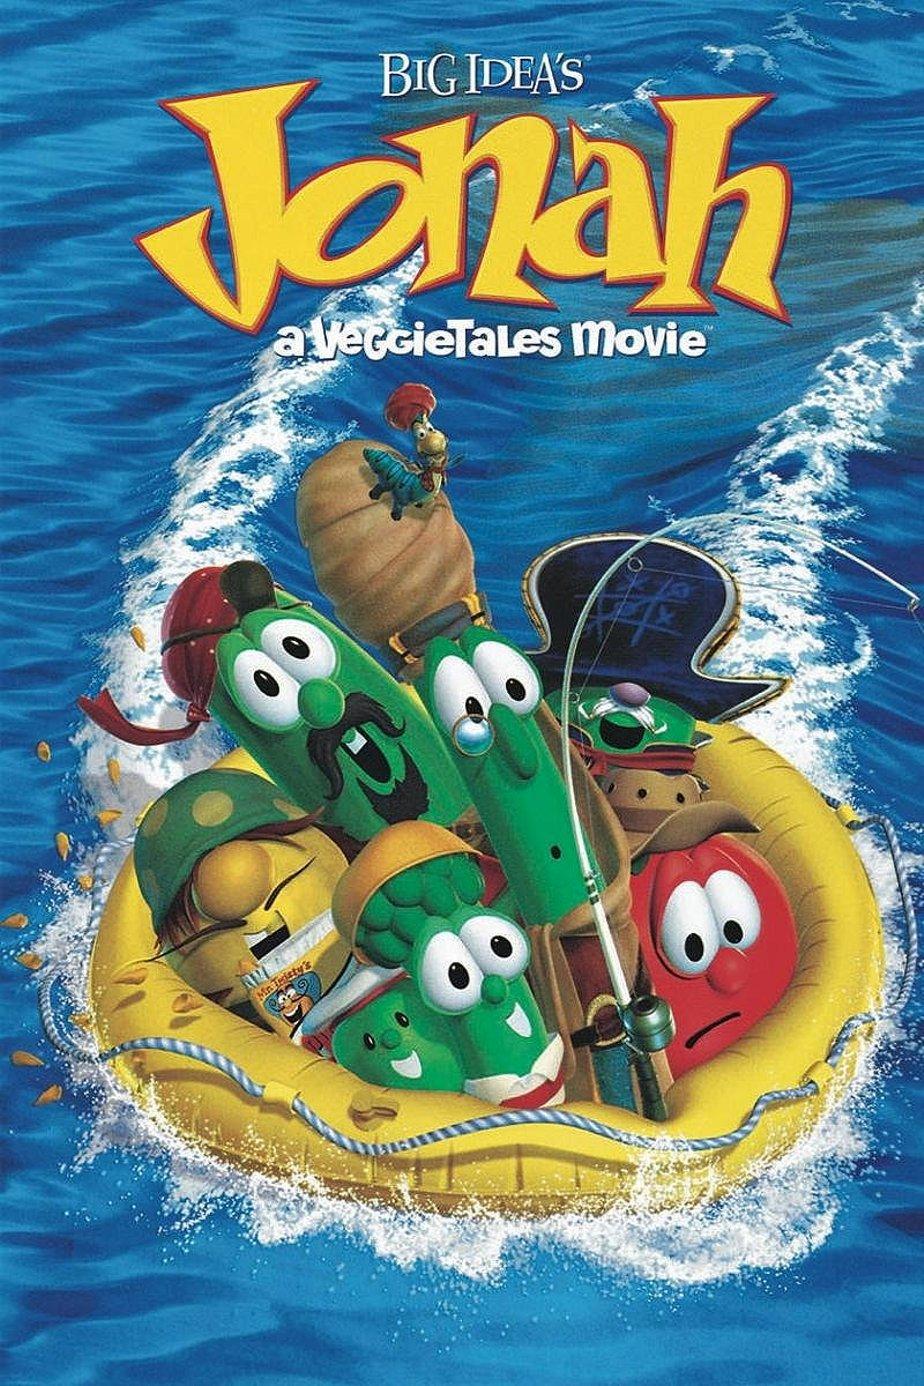 Приключения пиратов в Стране Овощей